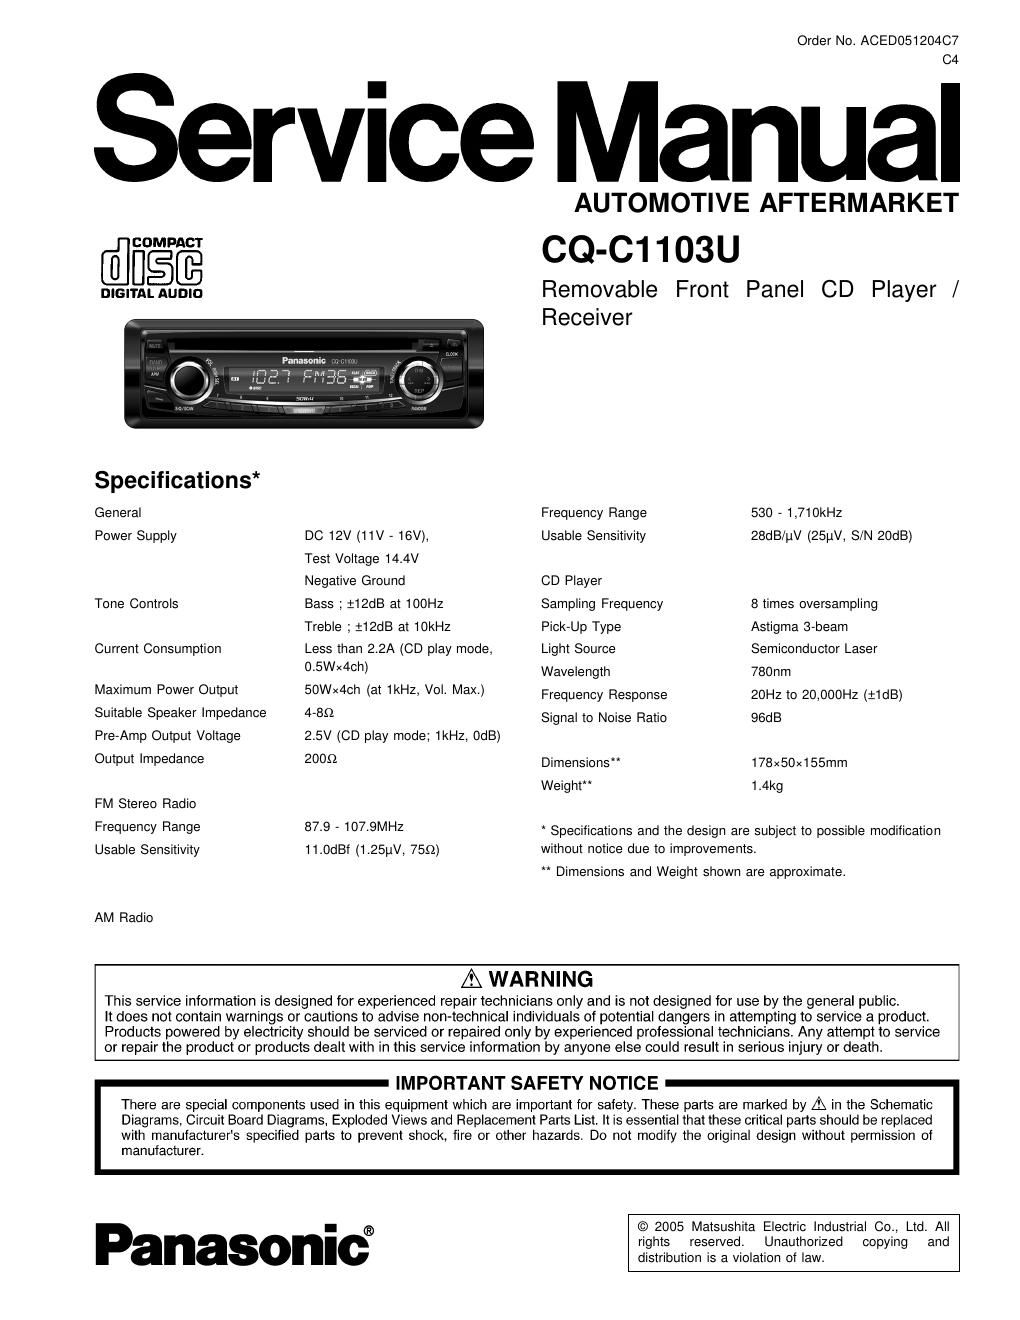 panasonic cq c 1103 service manual